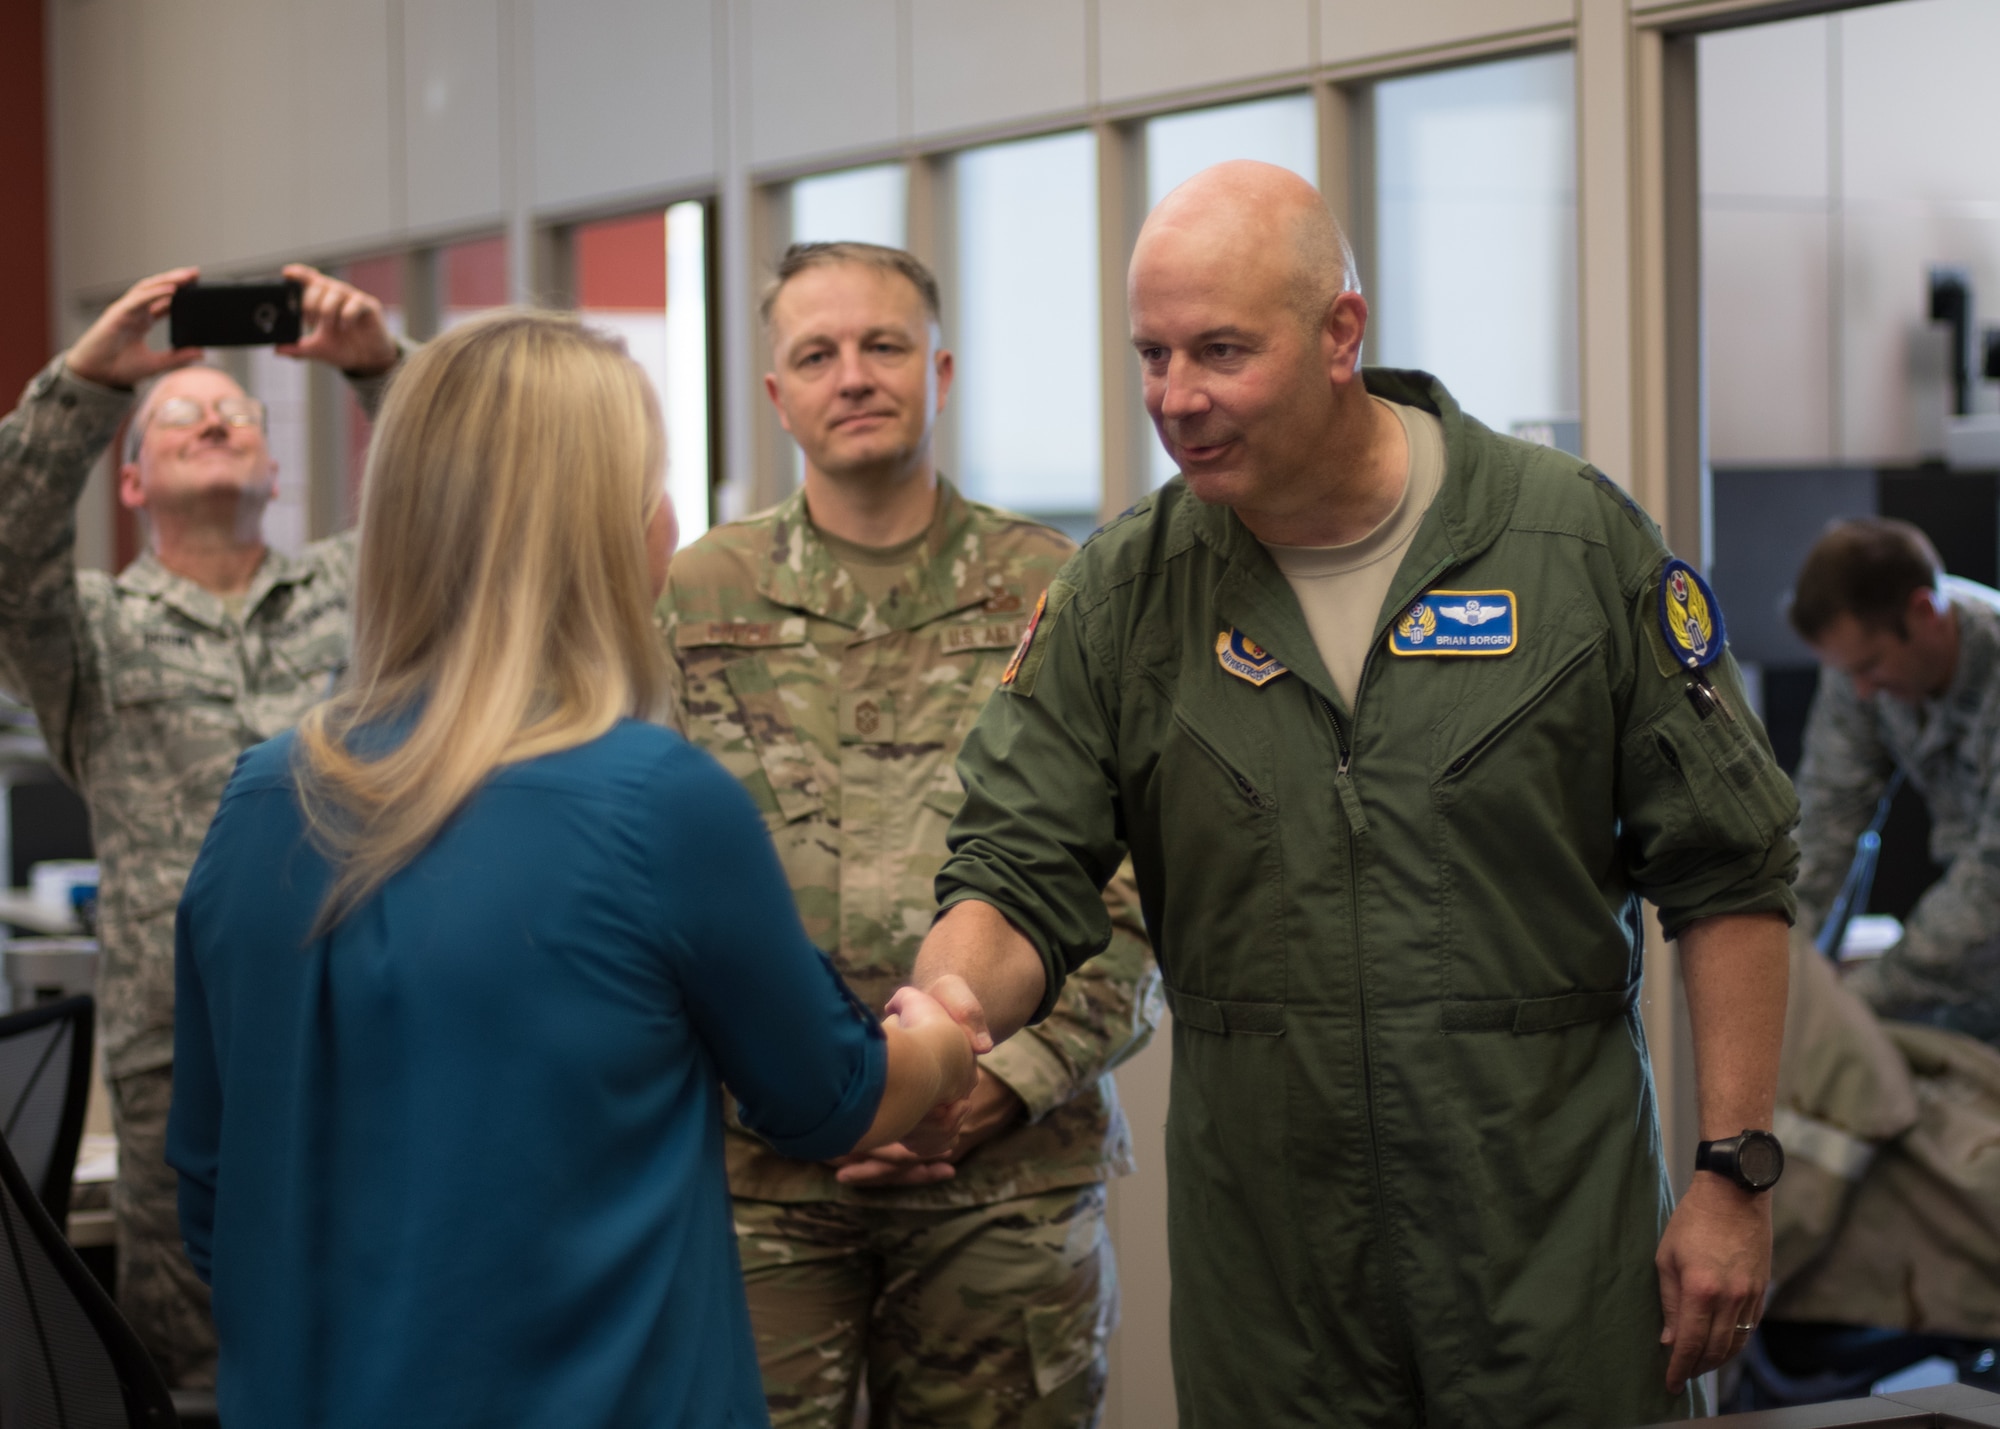 10th Air Force leadership visits 442d FW